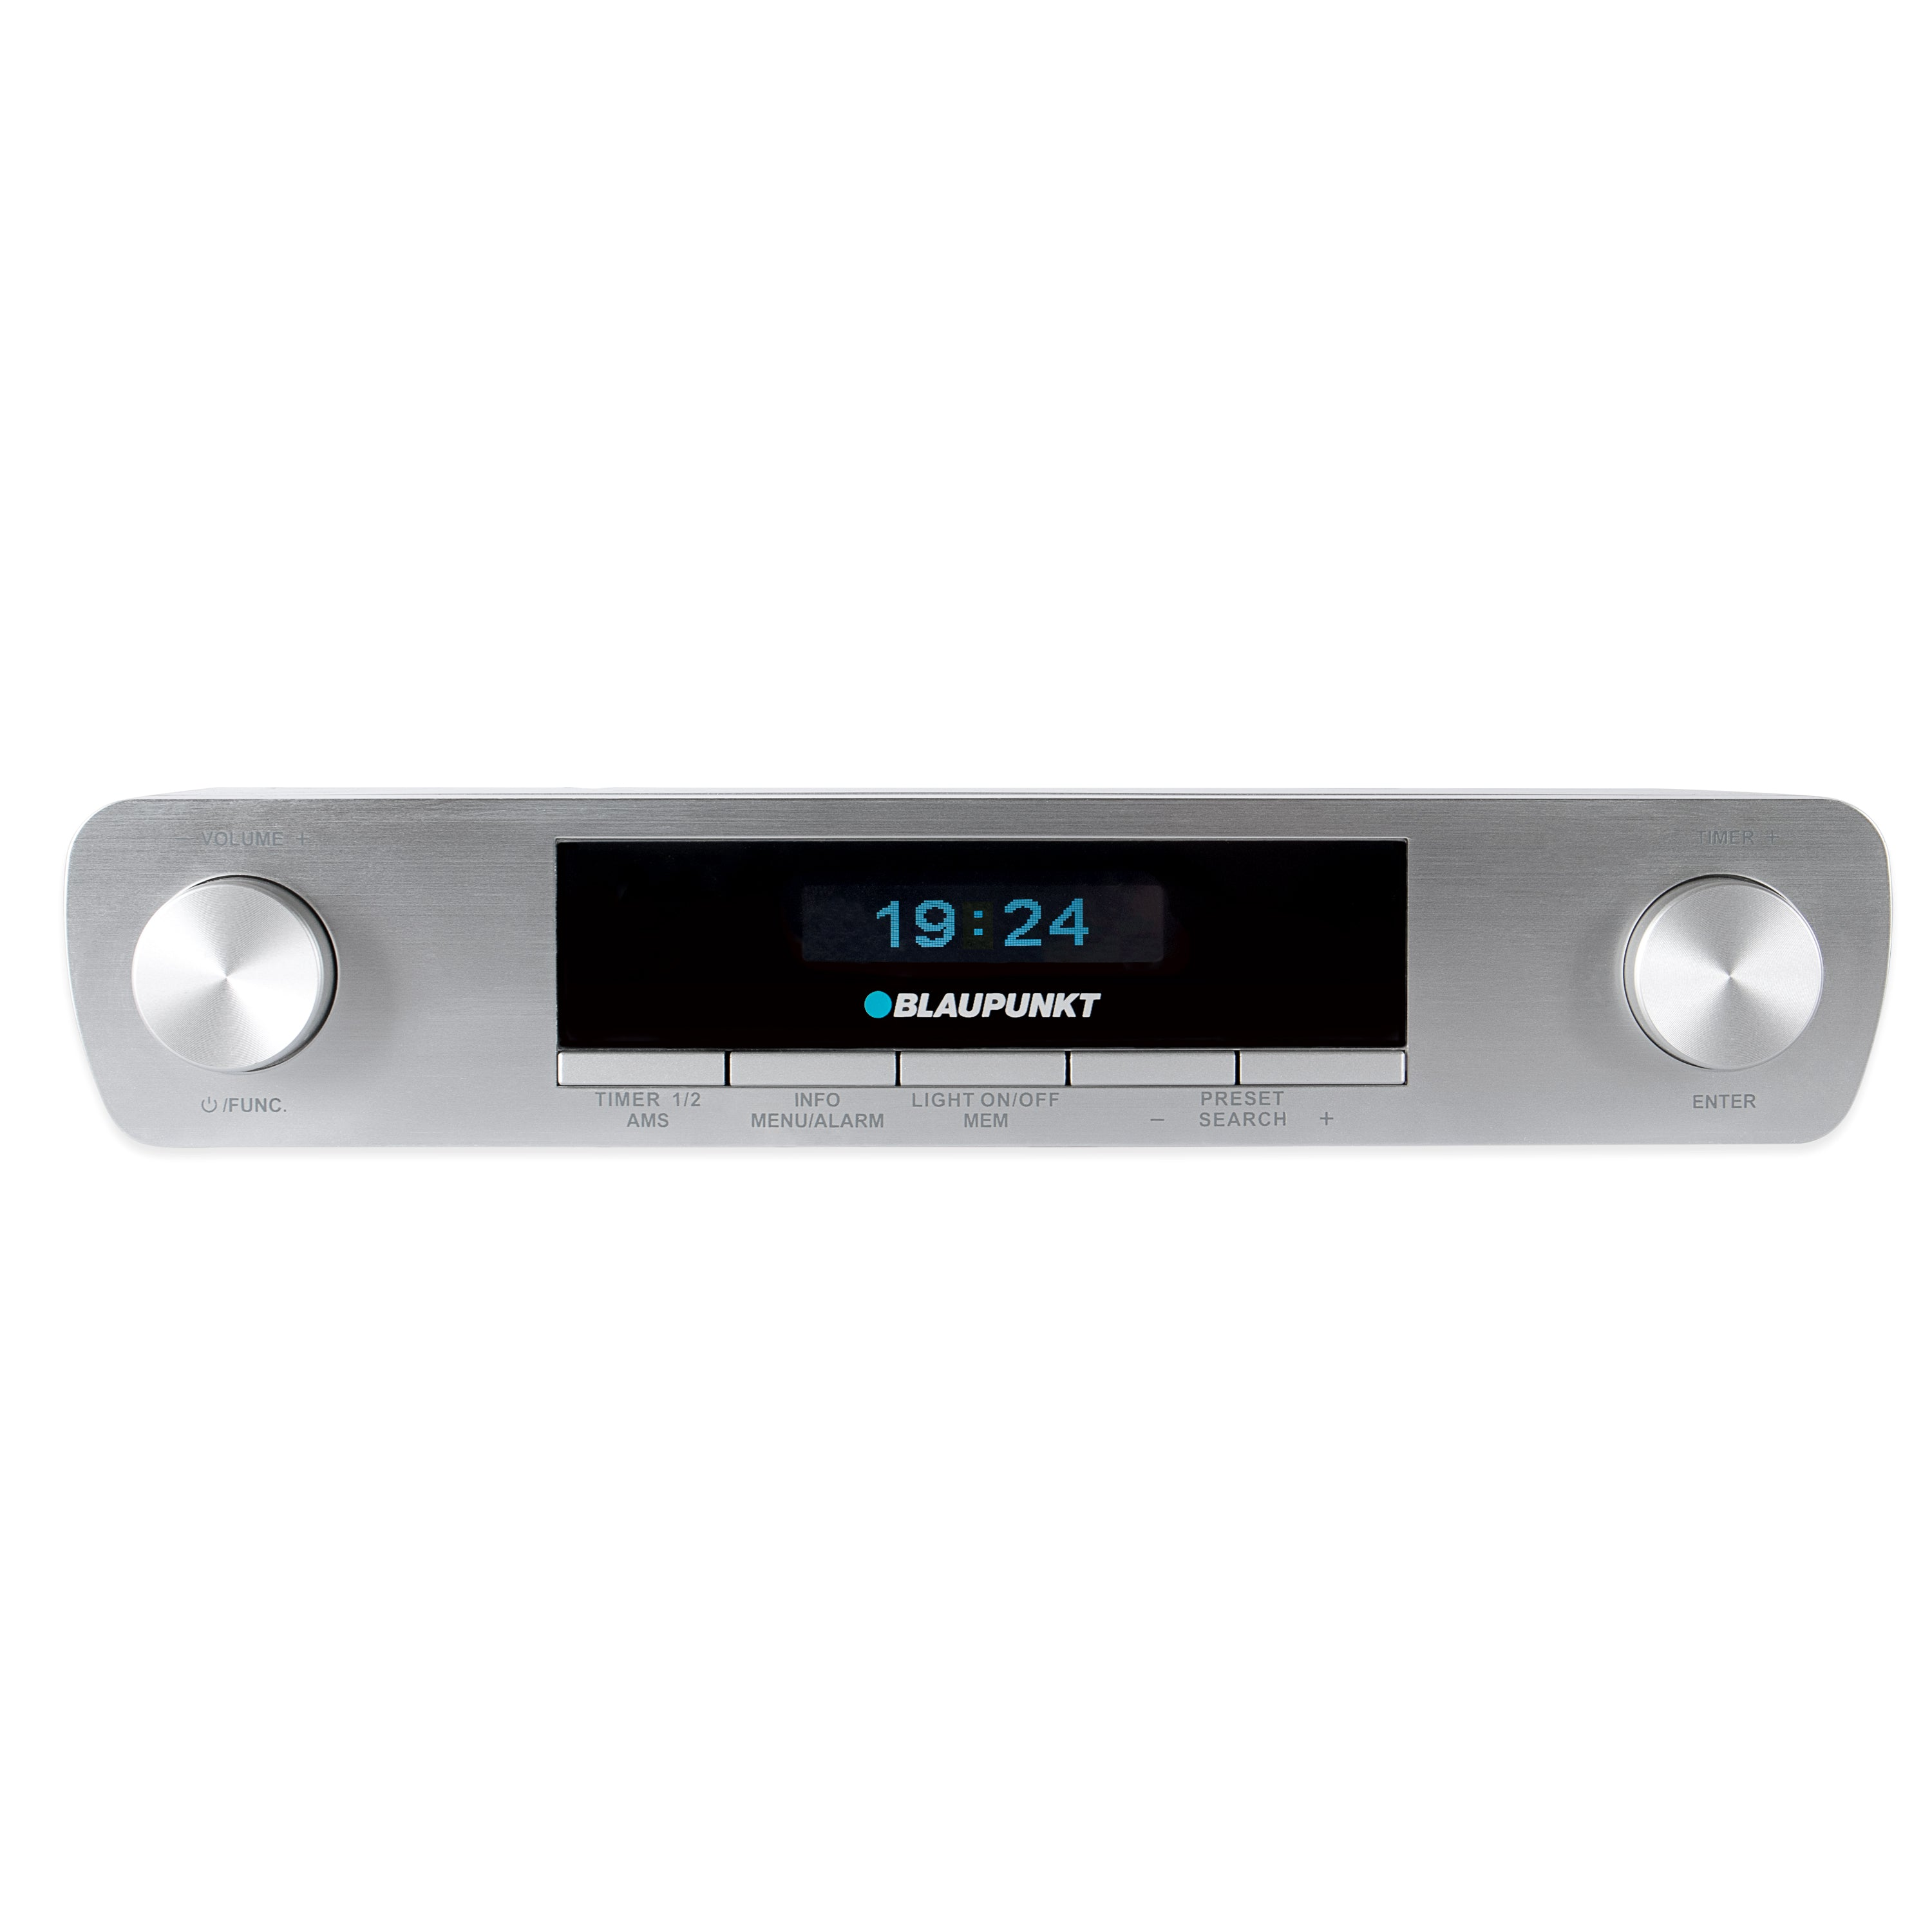 BLAUPUNKT Bluetooth Küchenradio mit DAB+ DAB, Silber FM, DAB+, KRD 30 DAB, | Küchenradio